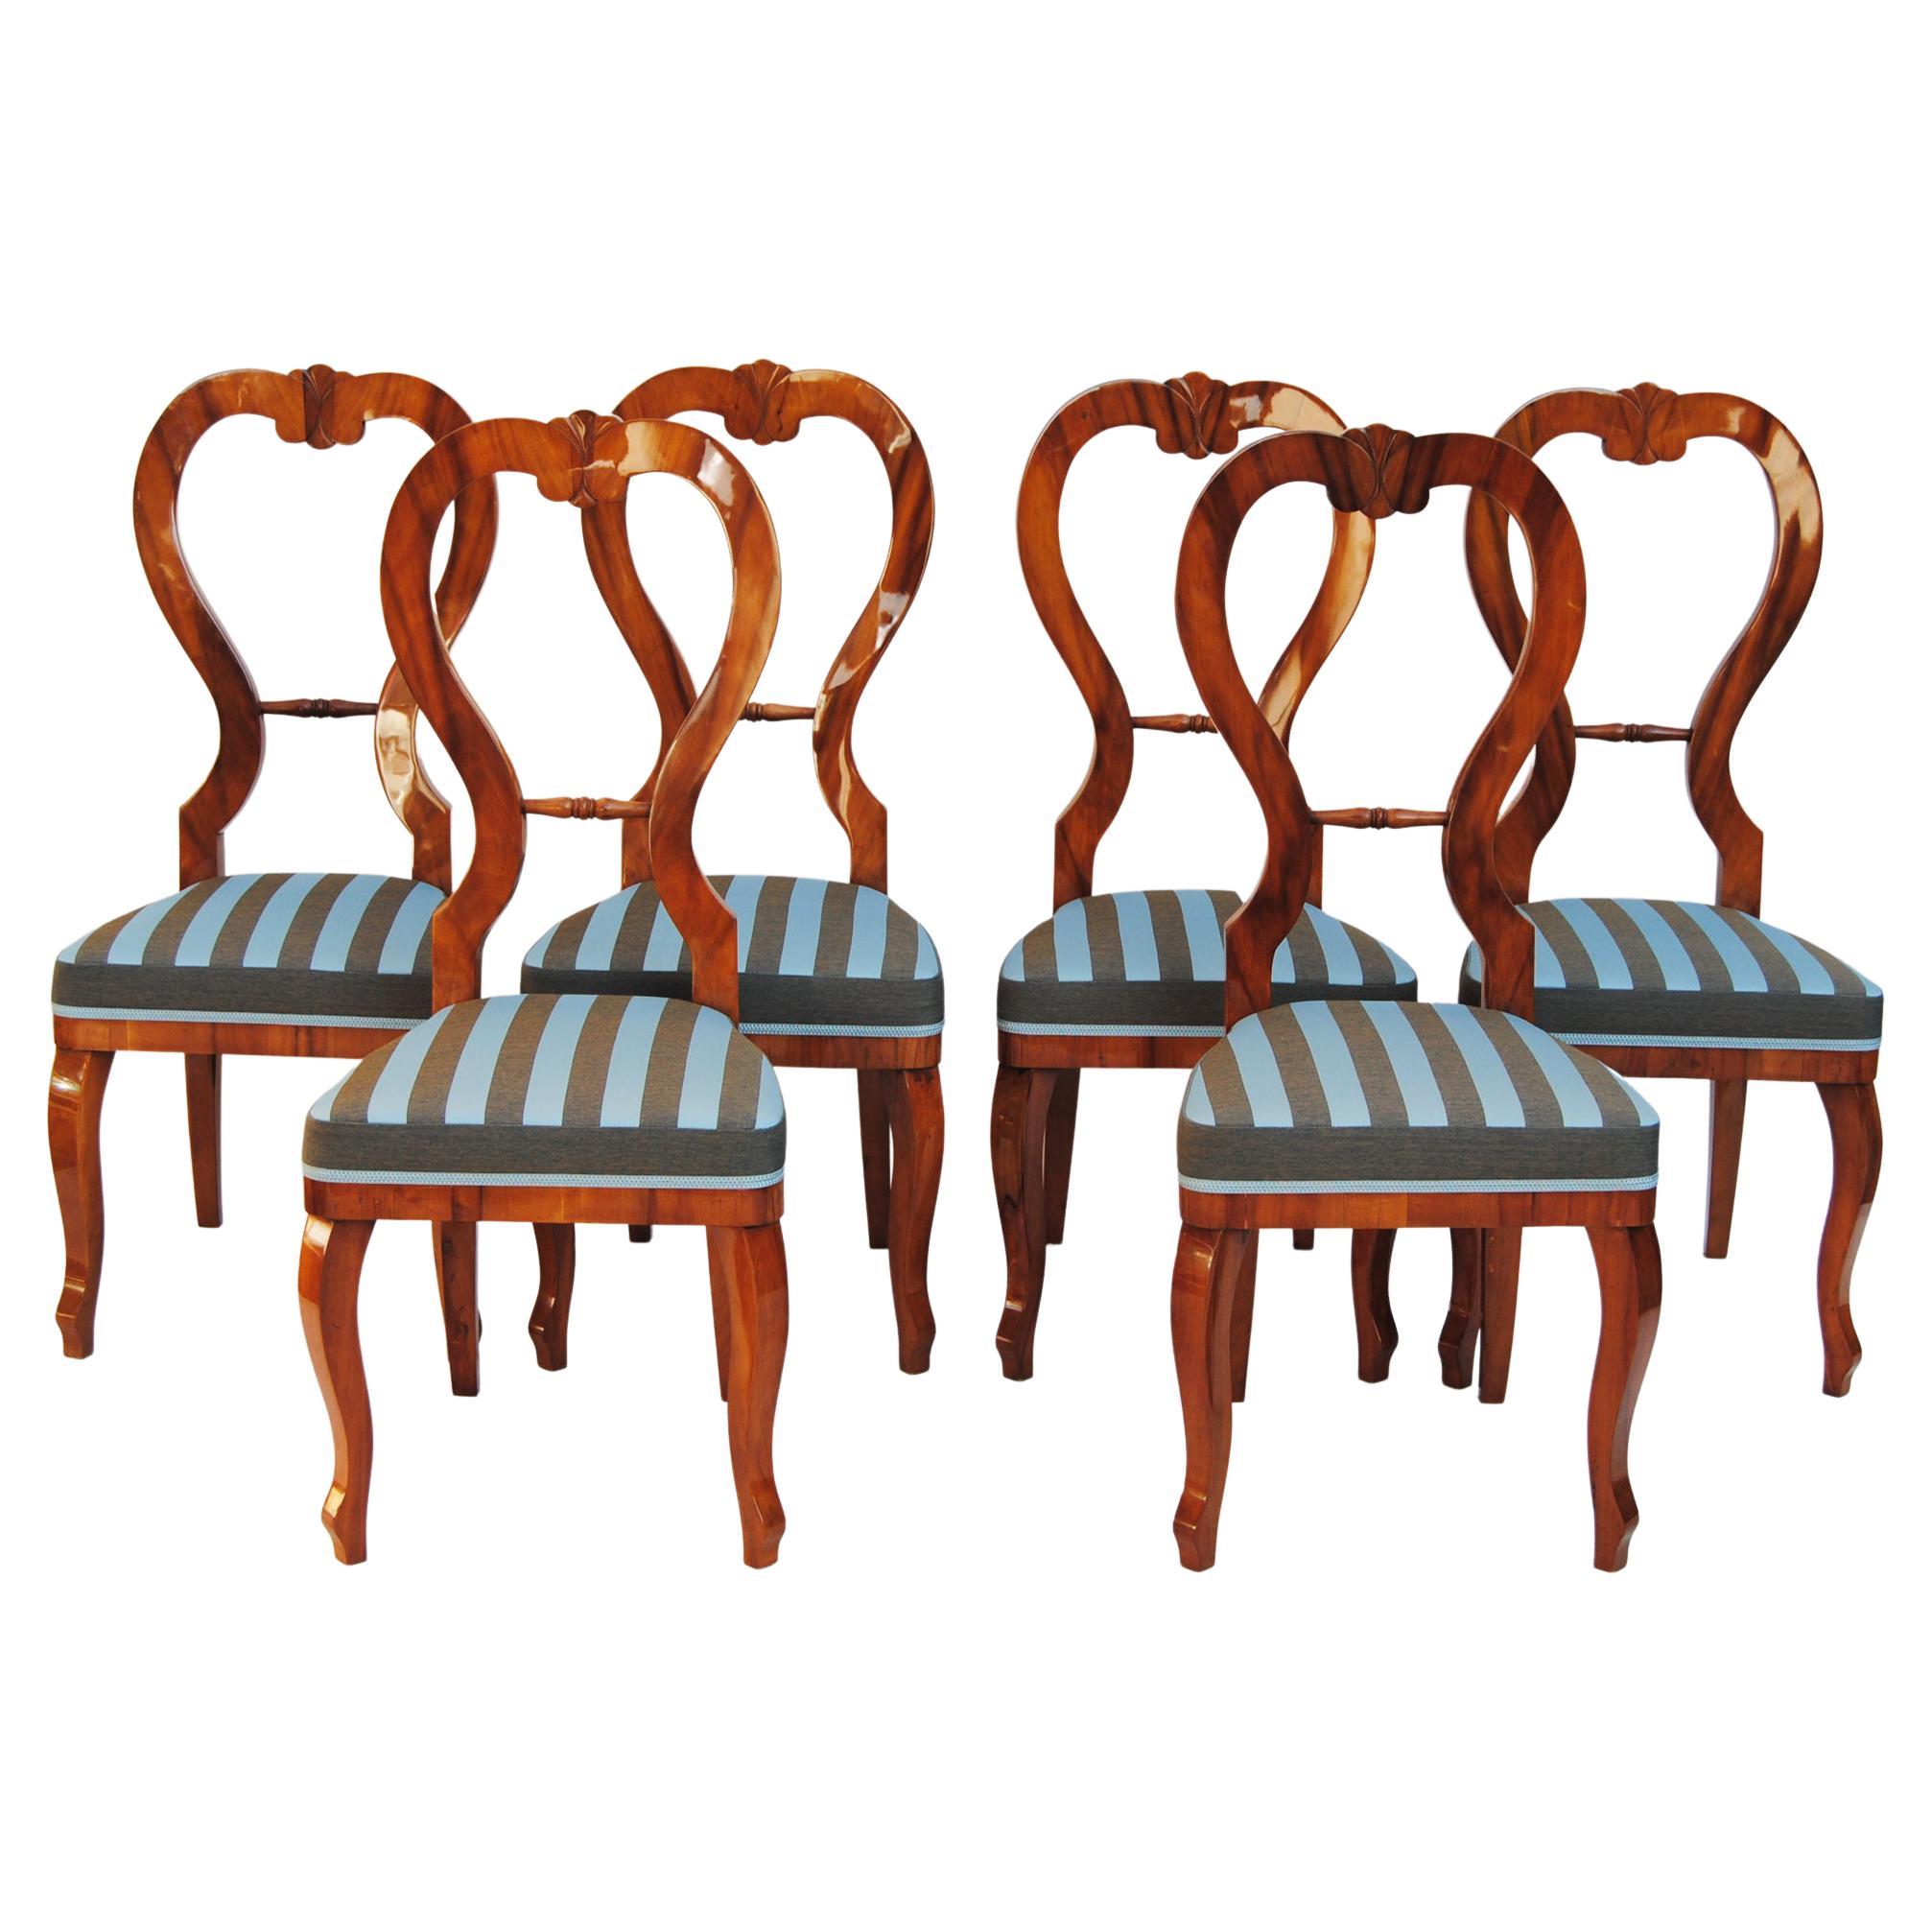 Set of Six Biedermeier Chairs, Made in Czechia, 1840s, Cherry-Tree For Sale